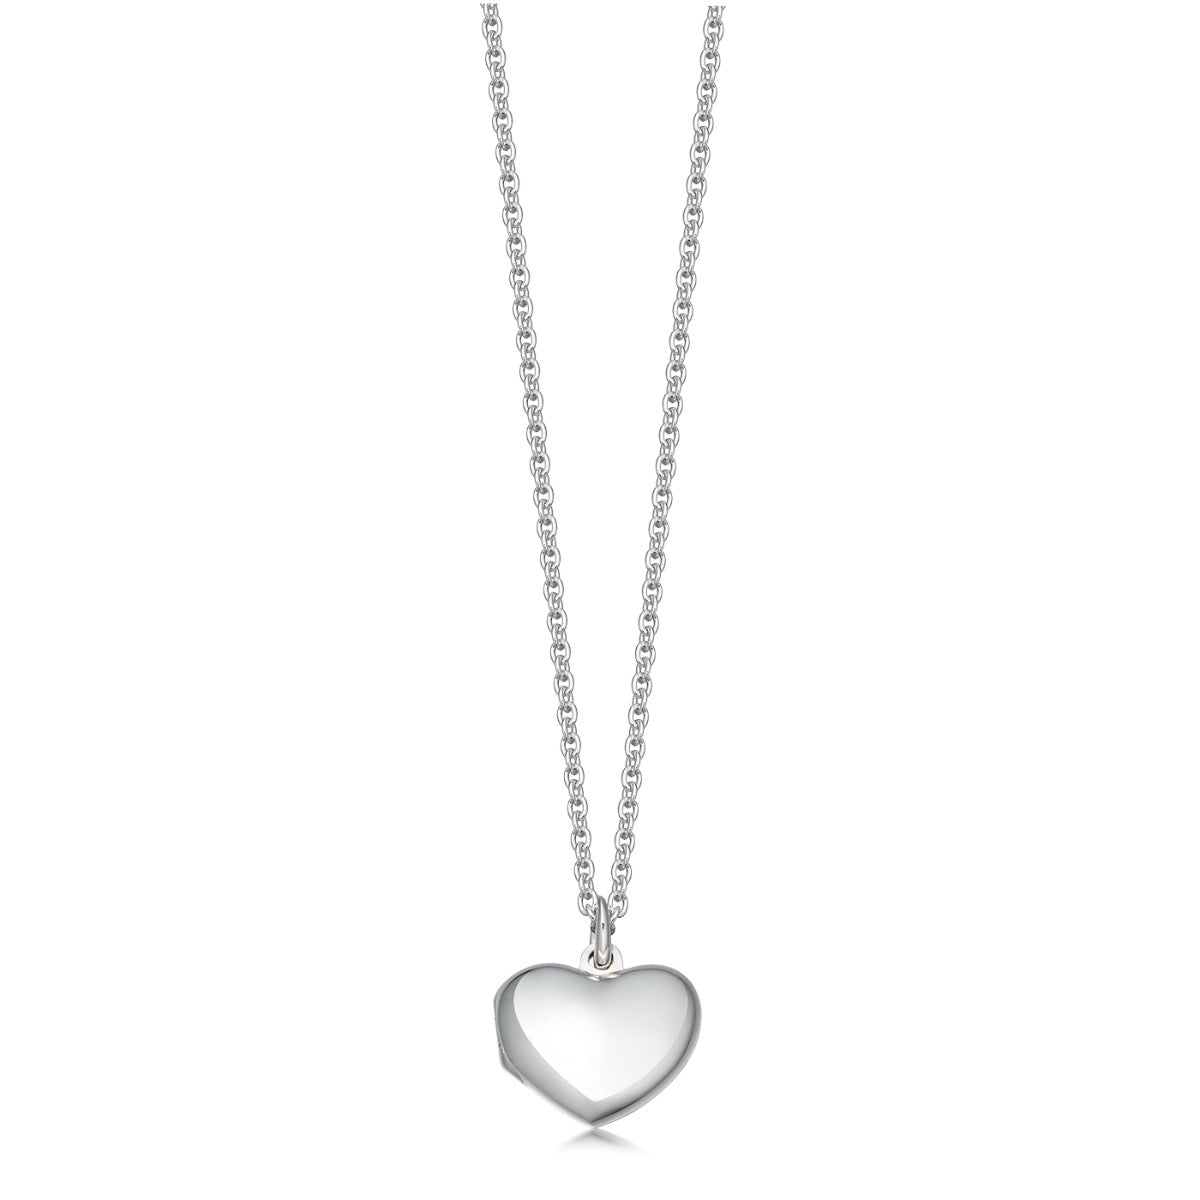 Small silver heart locket